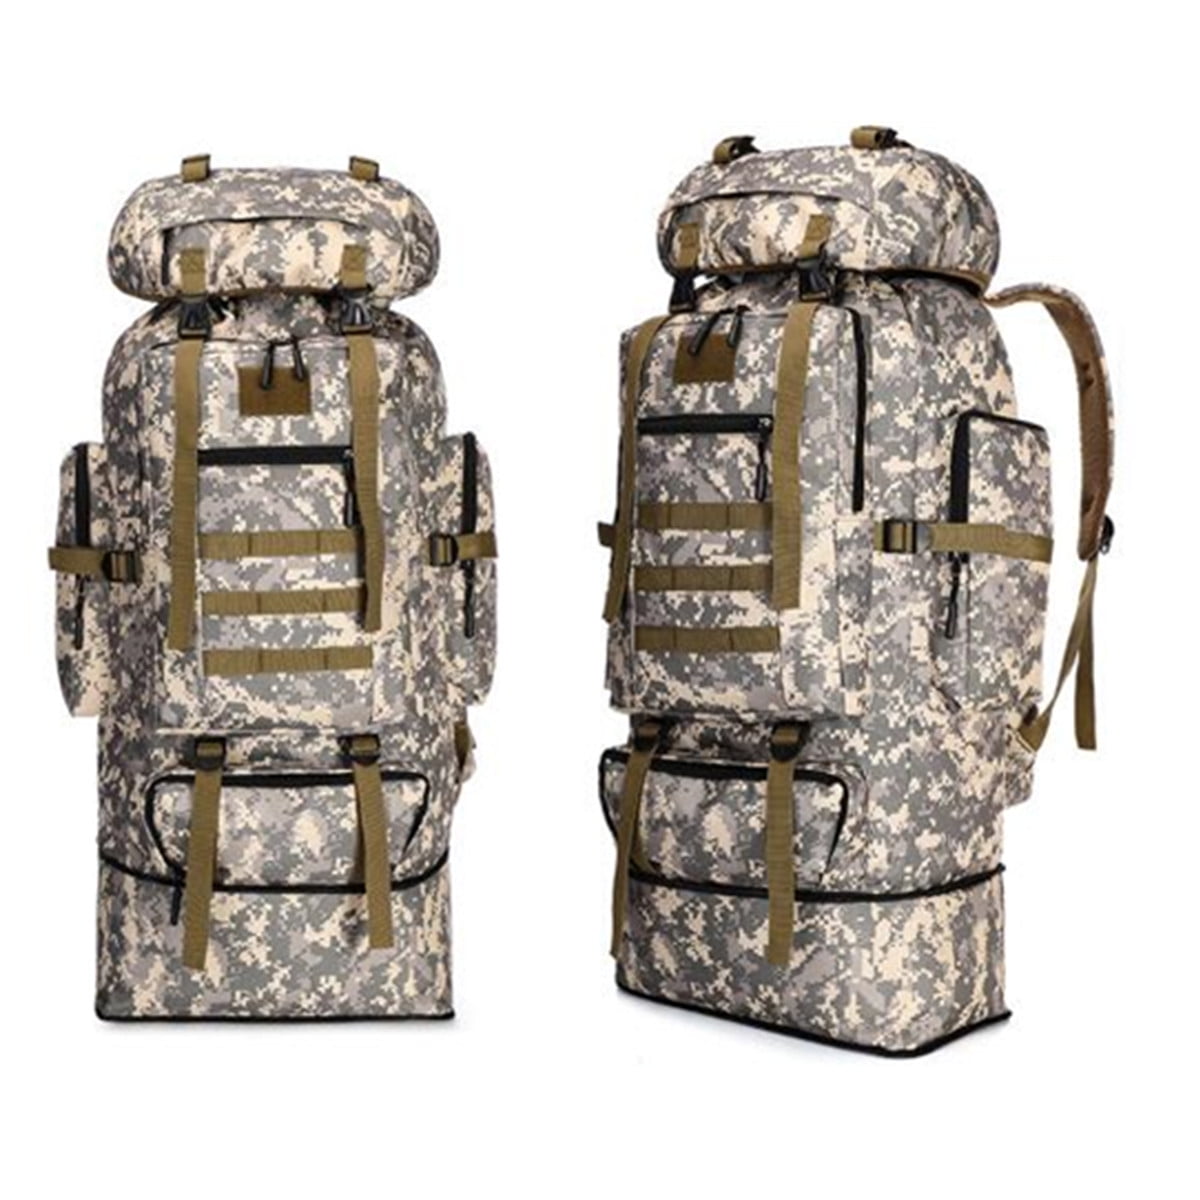 Chic Waterproof Outdoor Tactical Backpack Hiking Travel Rucksack Bag Durable